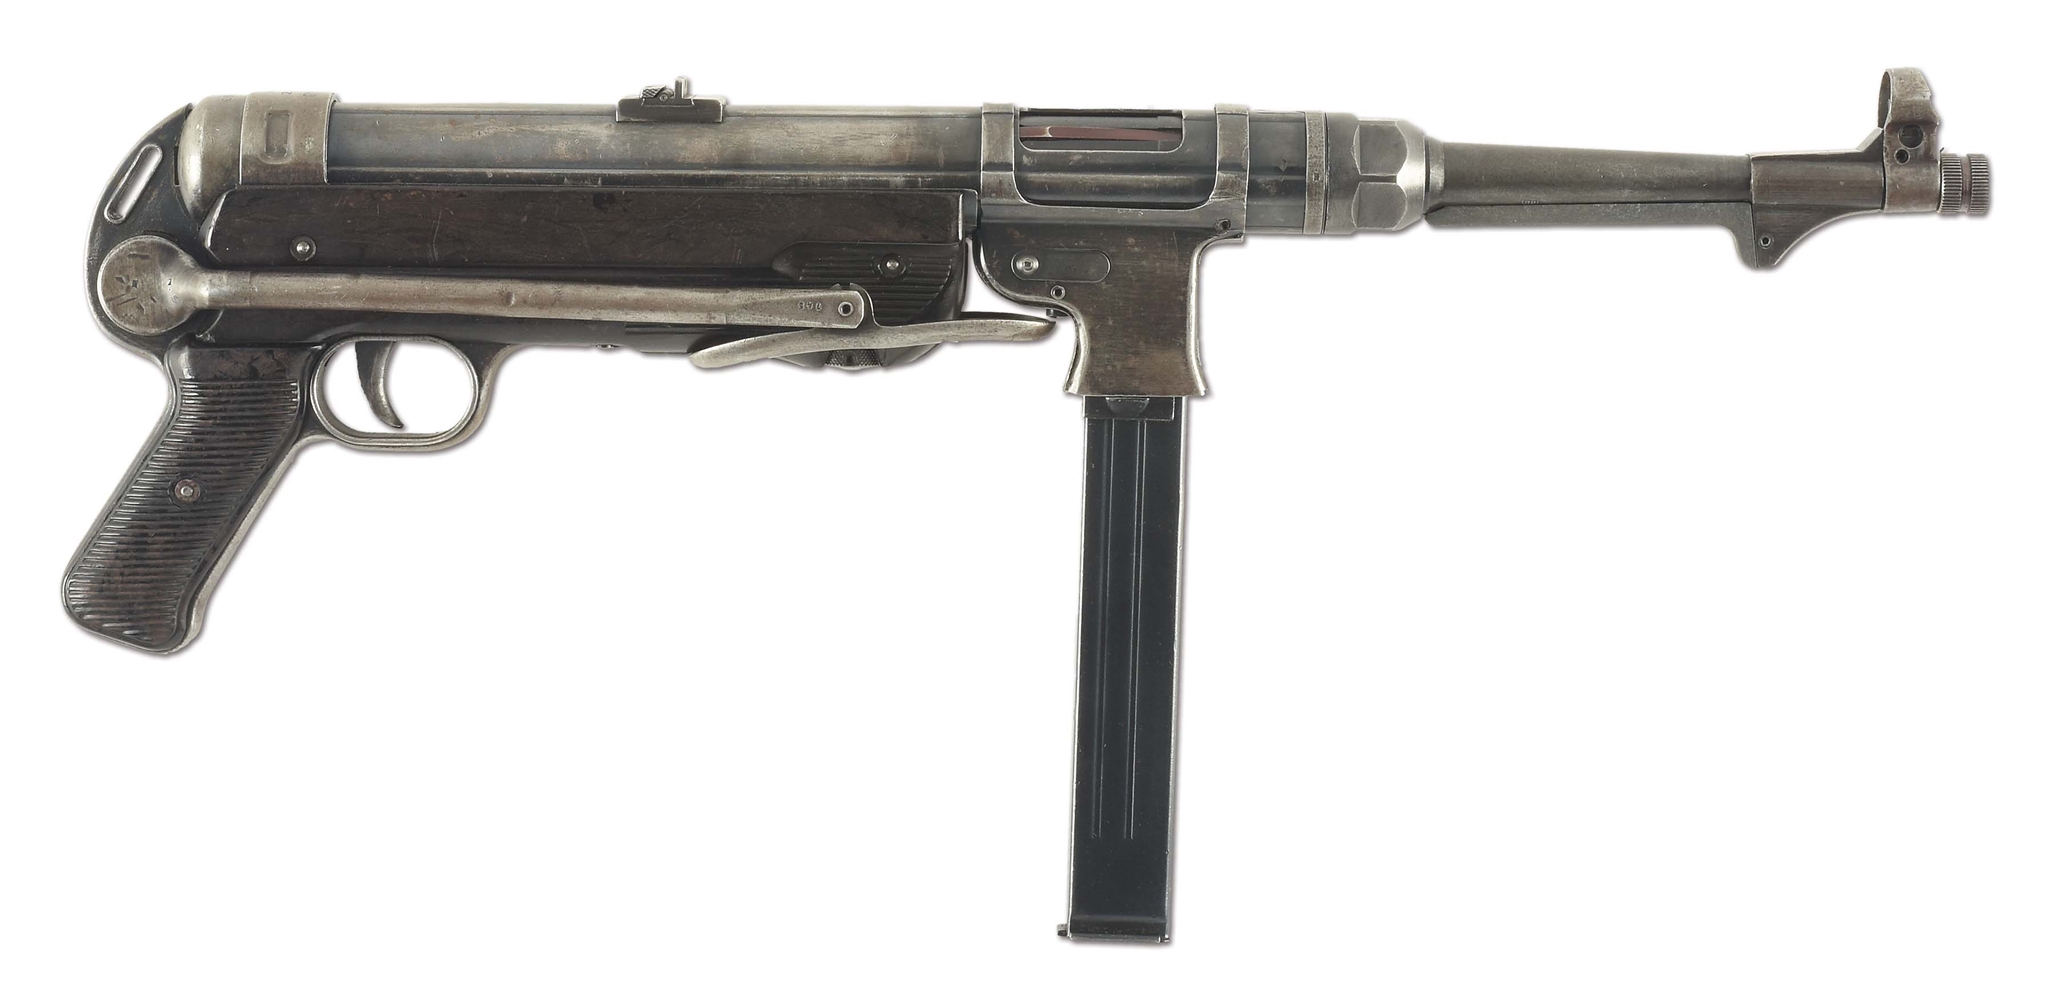 (N) ICONIC ORIGINAL TRANSITIONAL FLAT MAG HOUSING GERMAN MP-40 MACHINE GUN (CURIO AND RELIC).